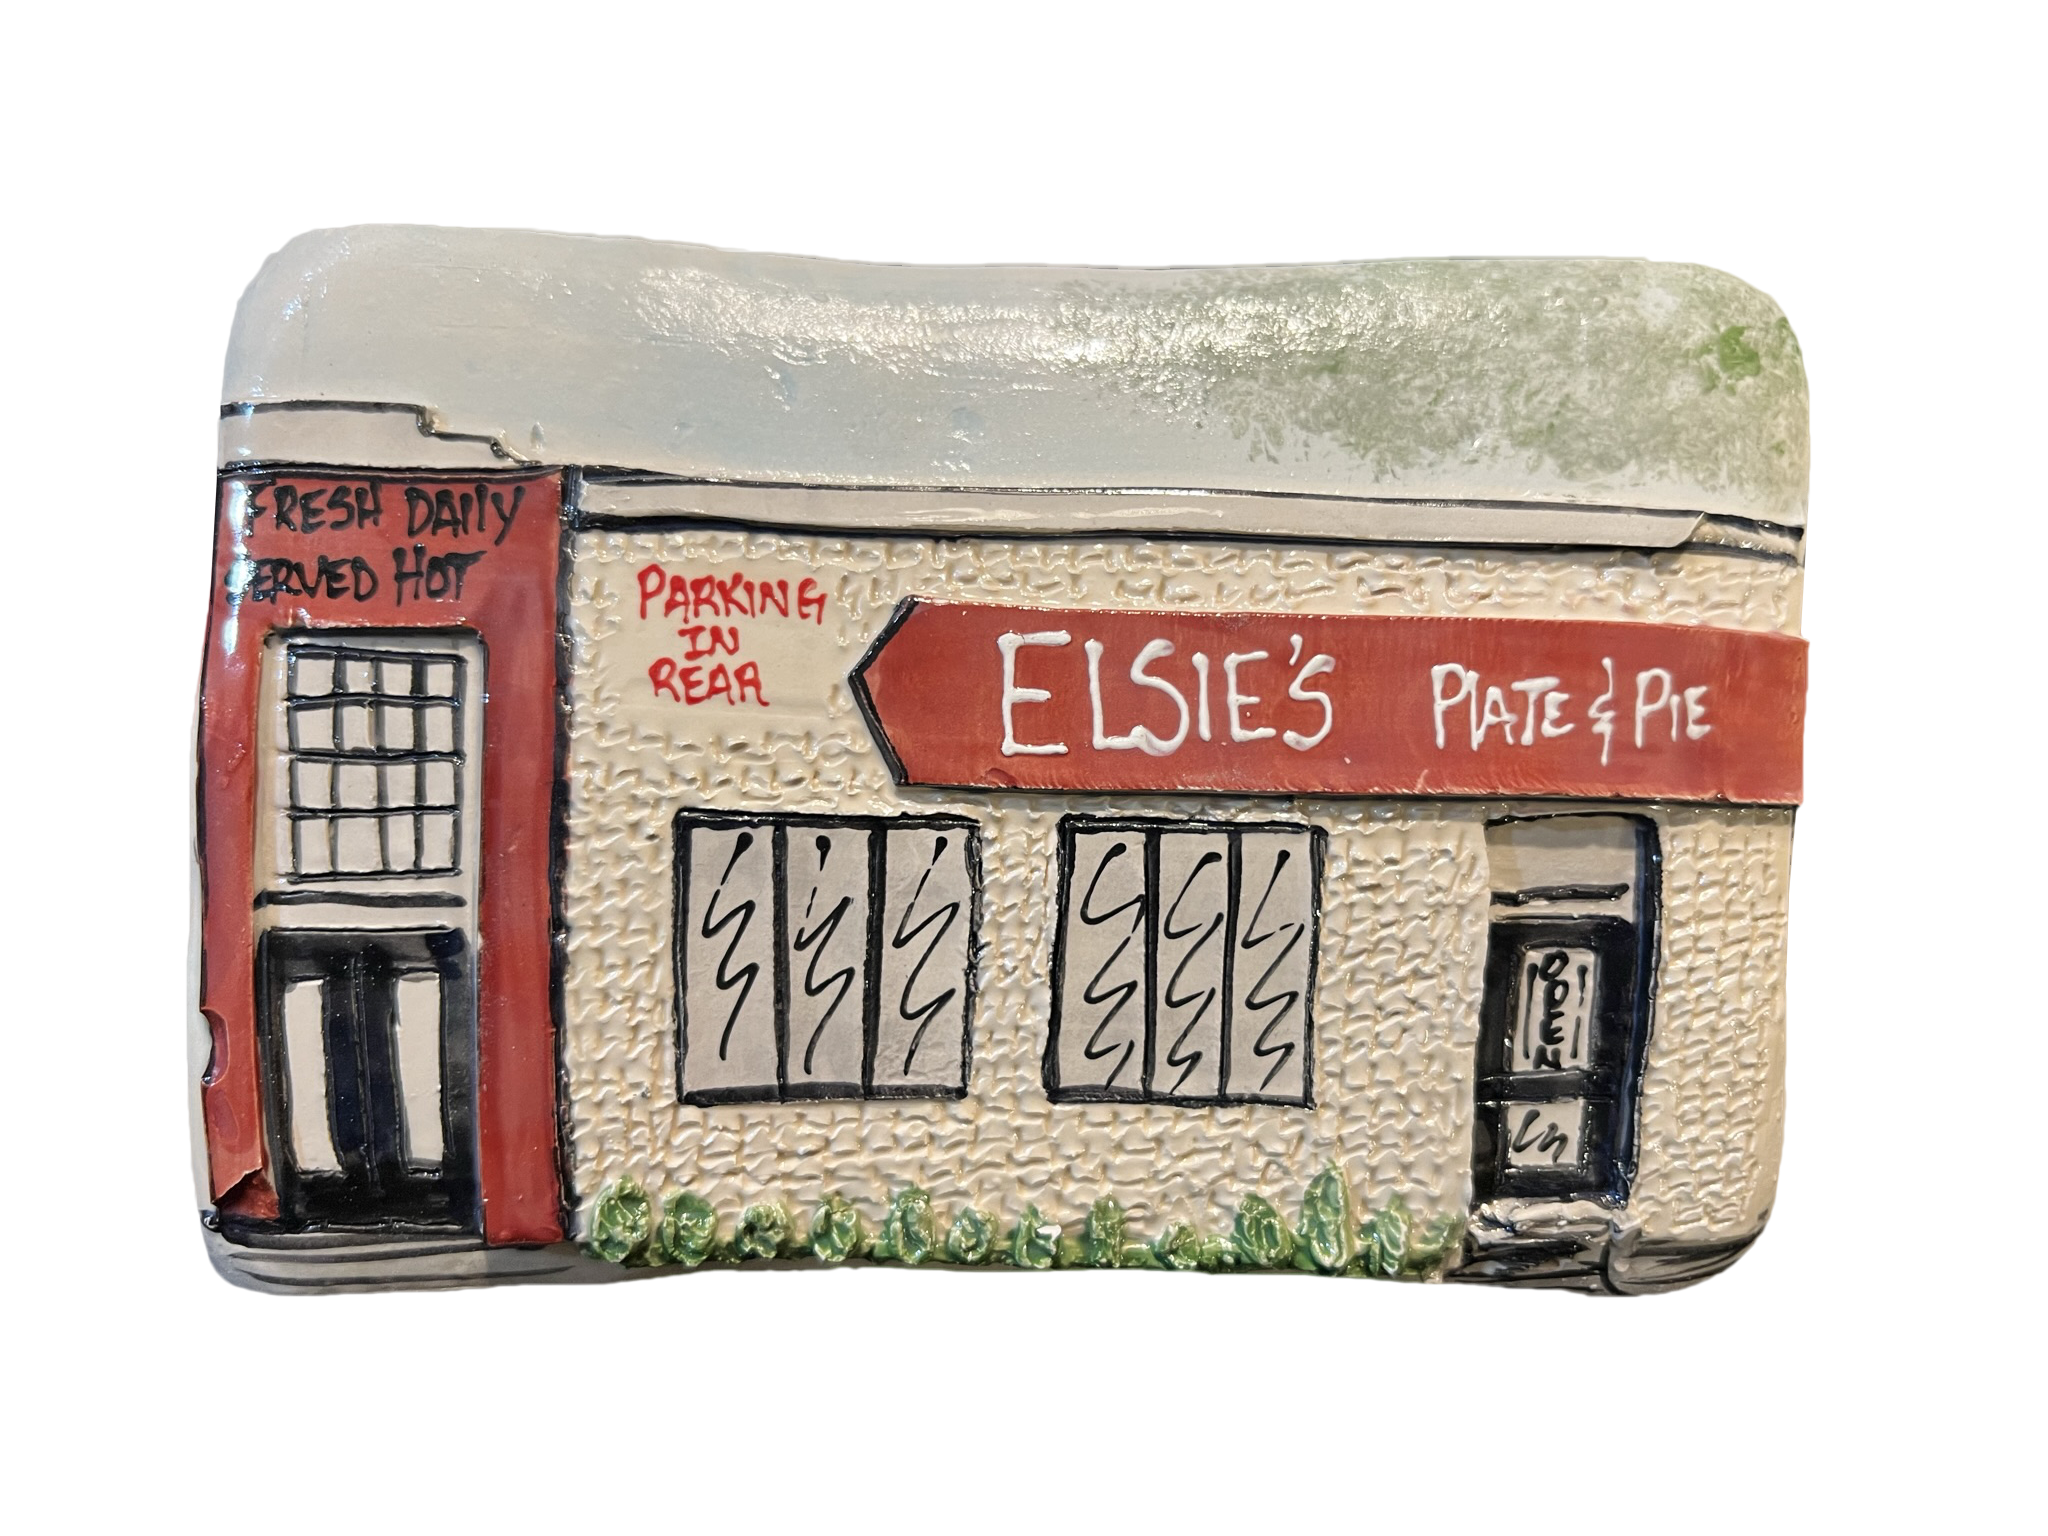 Elsie’s Plate & Pie Restaurant